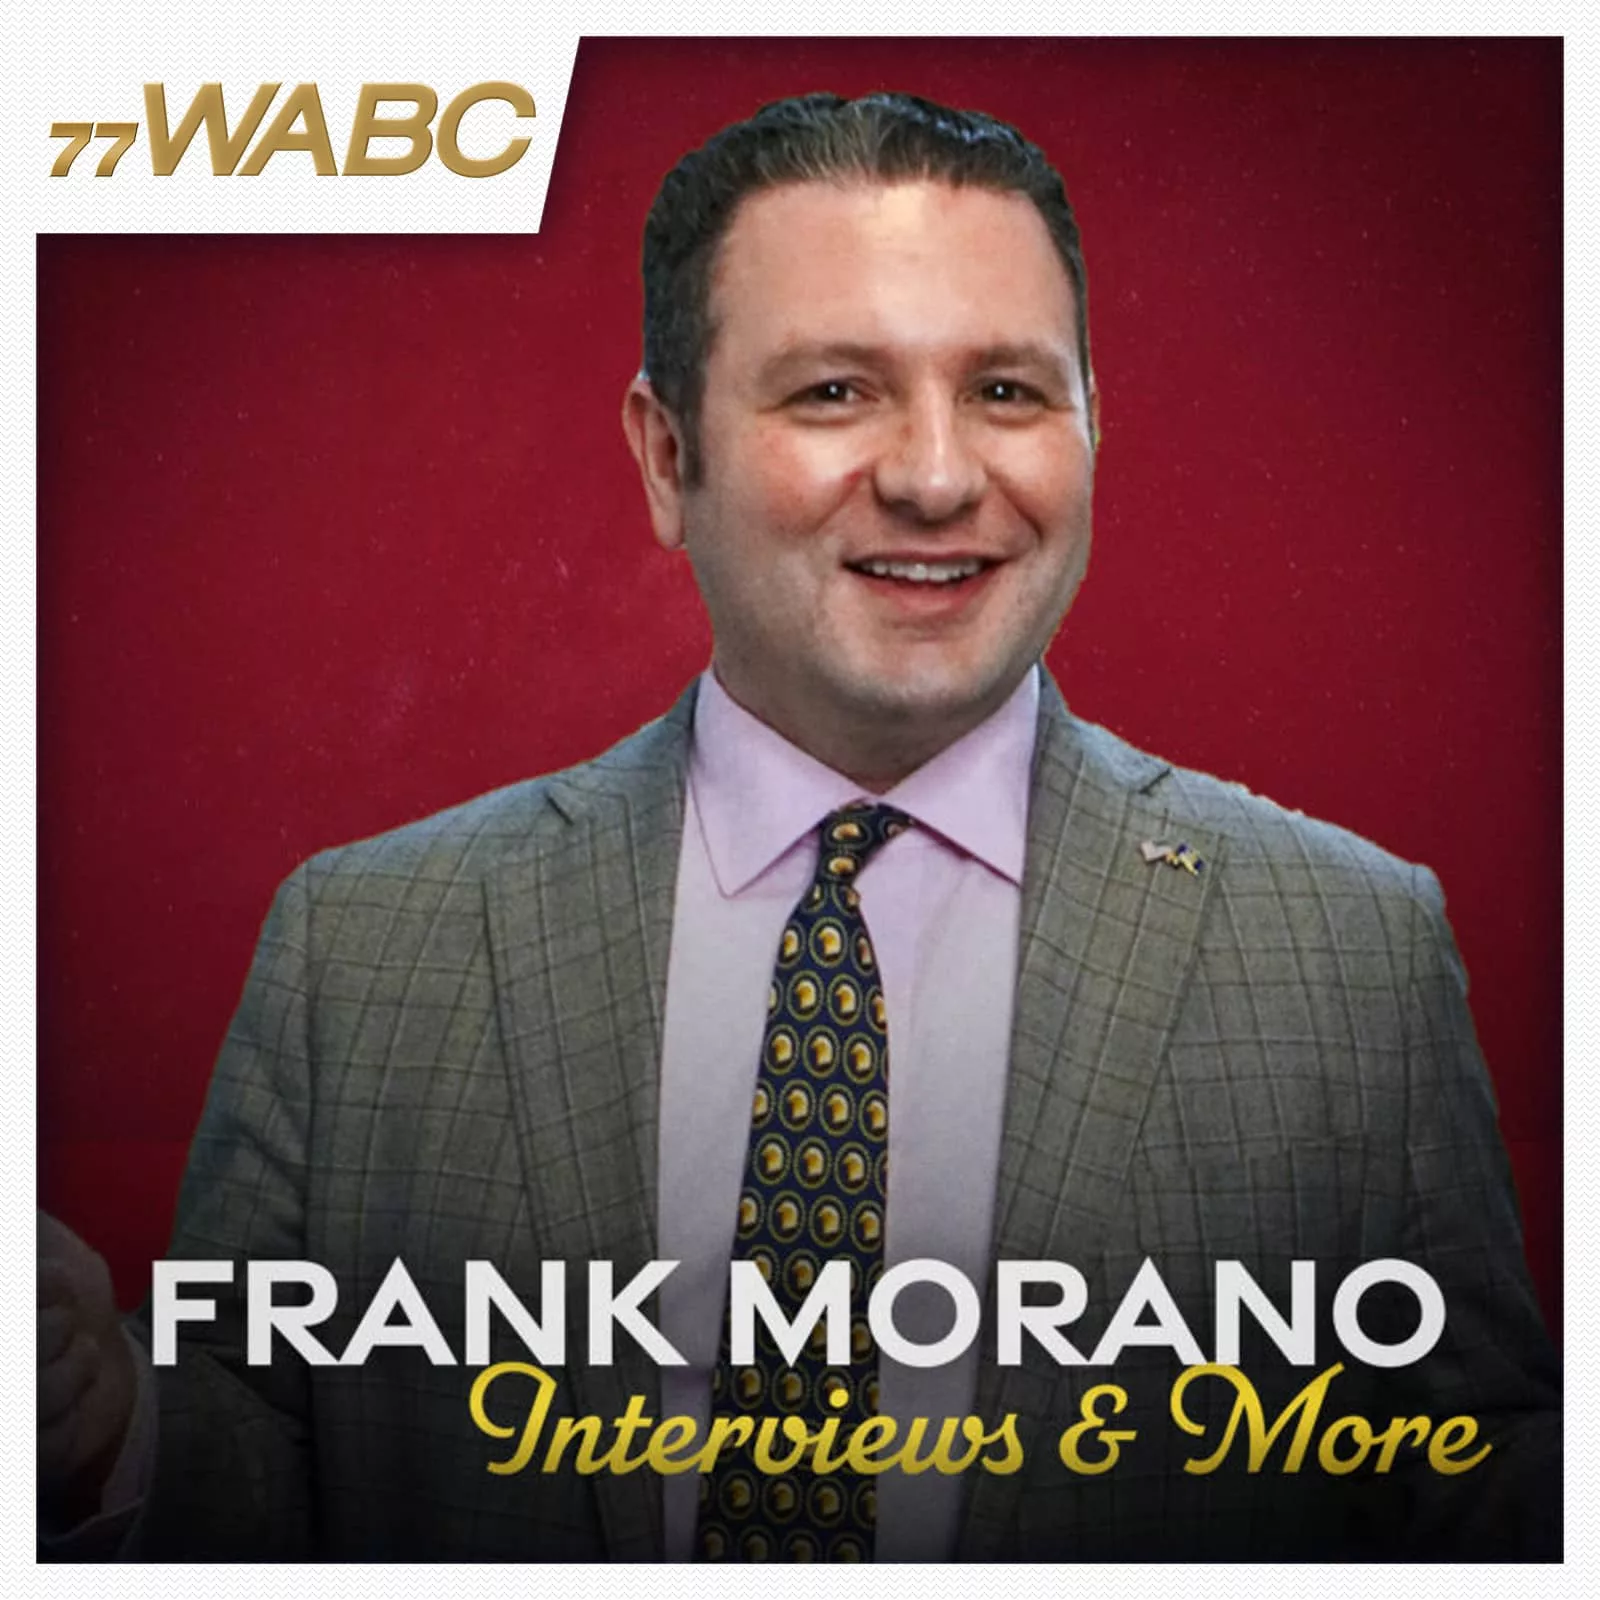 frank-morano-interviews-and-more-podcast-new-logo279740